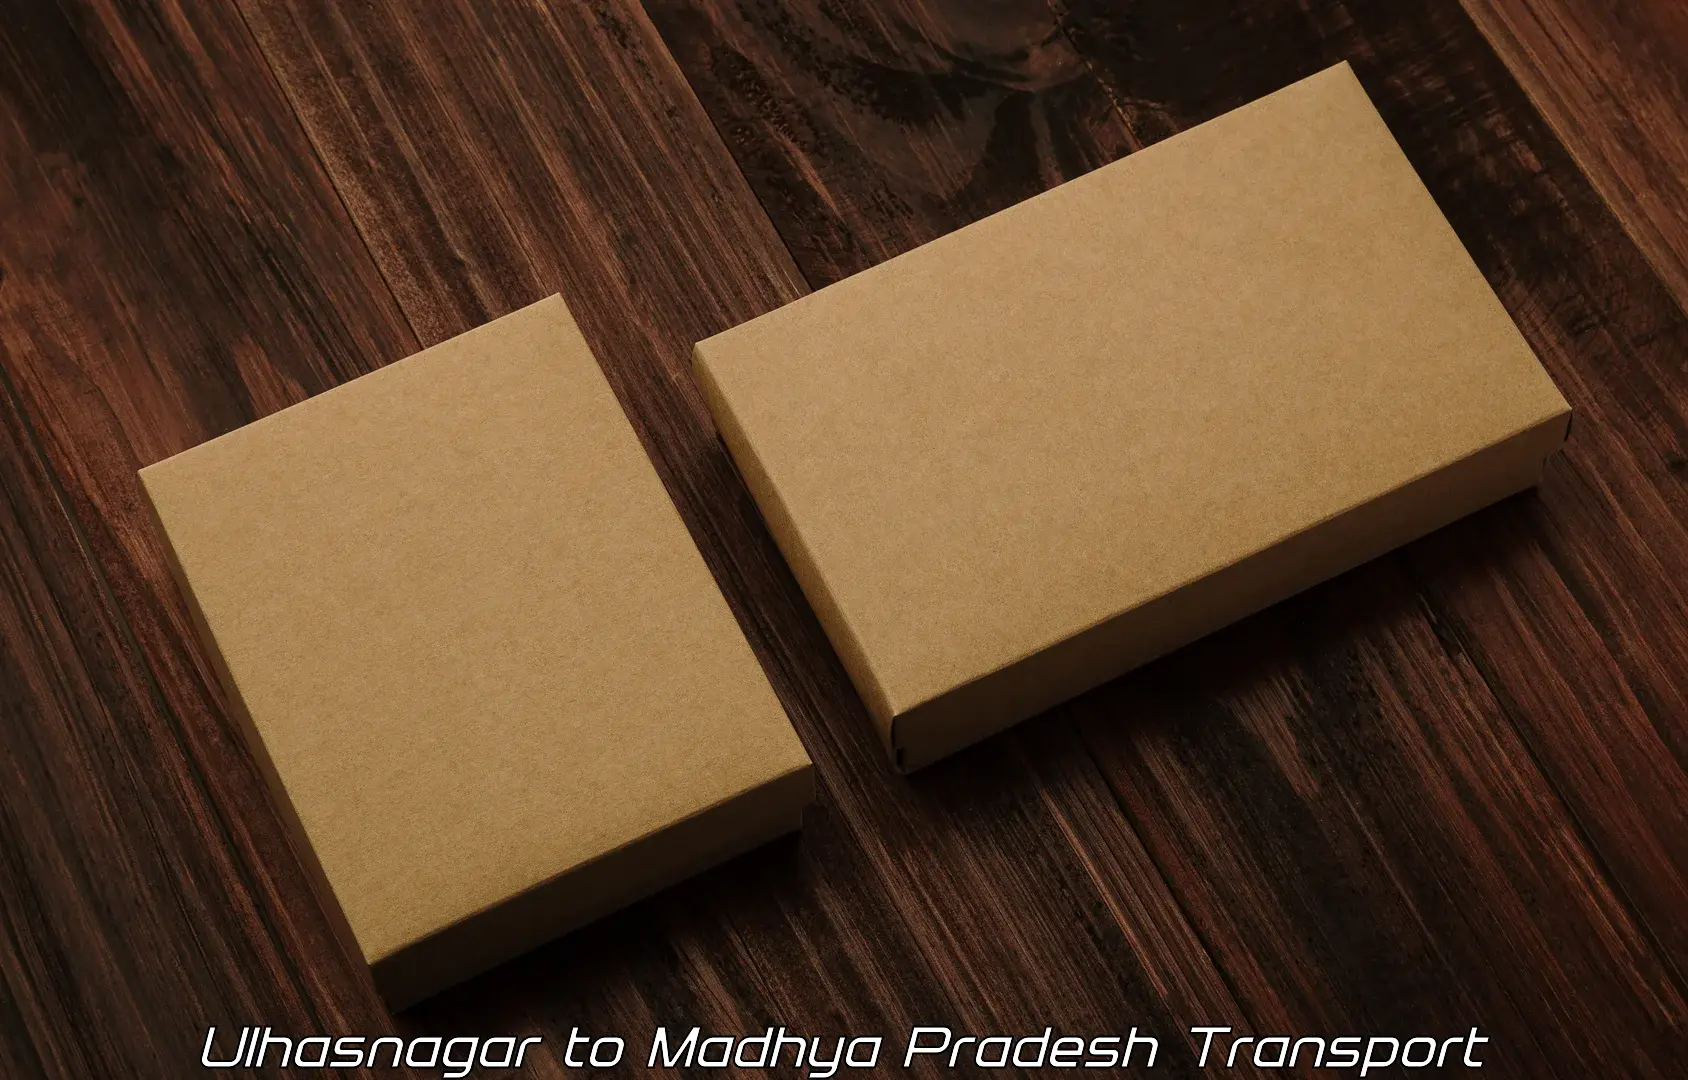 Shipping partner Ulhasnagar to Lavkush Nagar